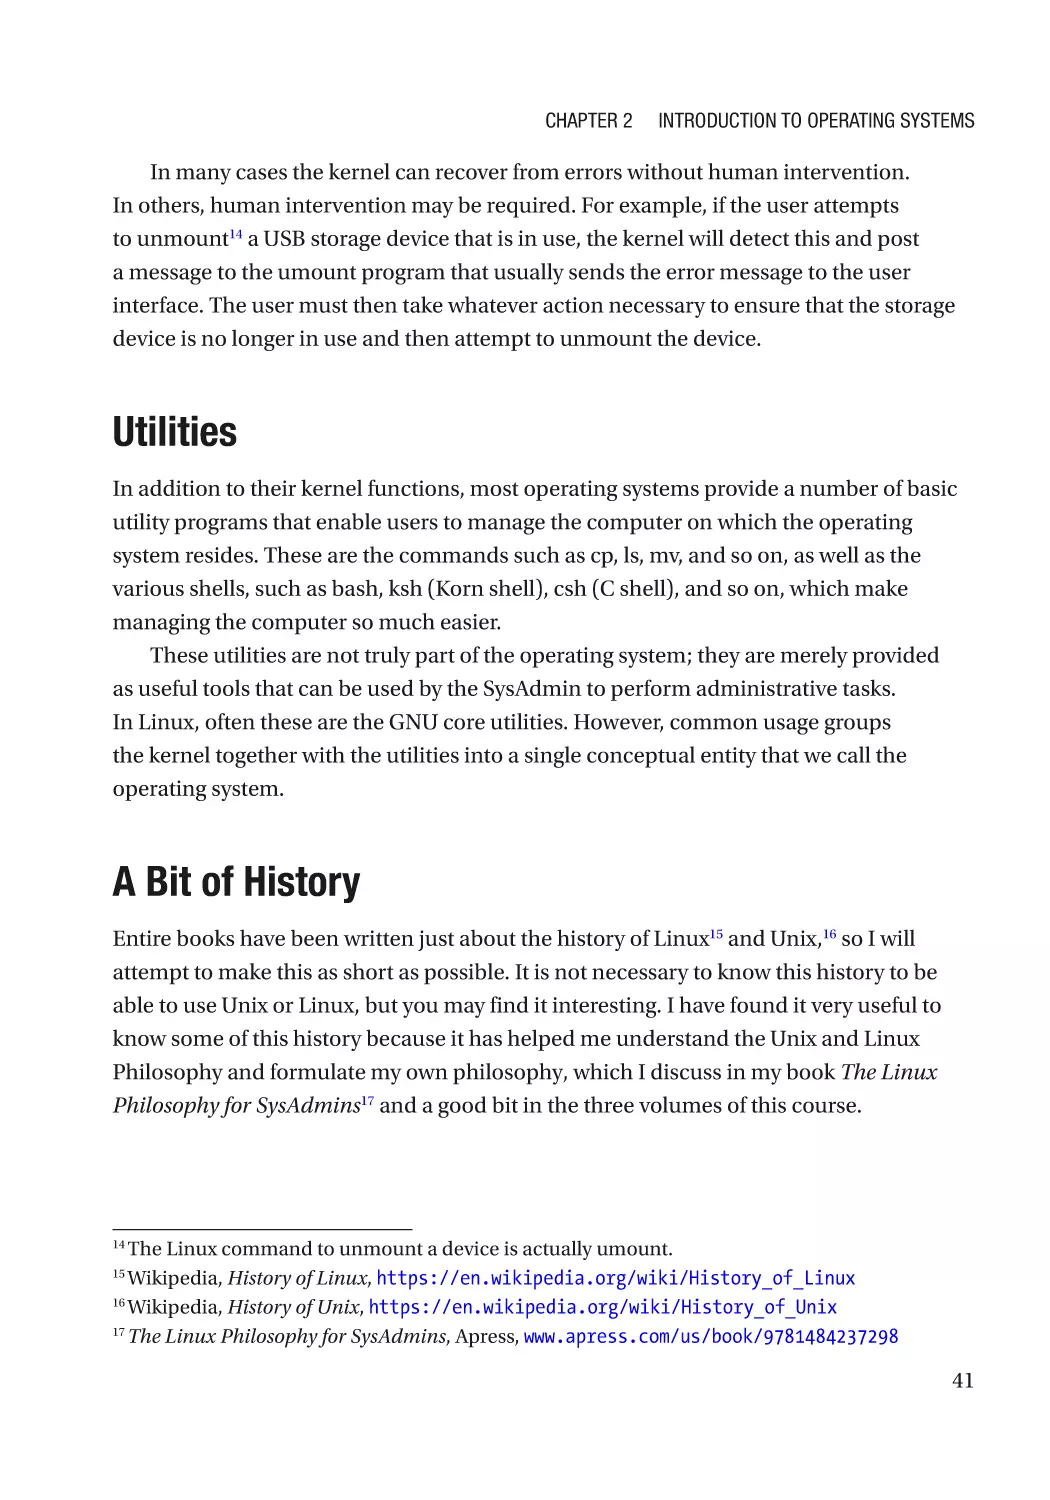 Utilities
A Bit of History